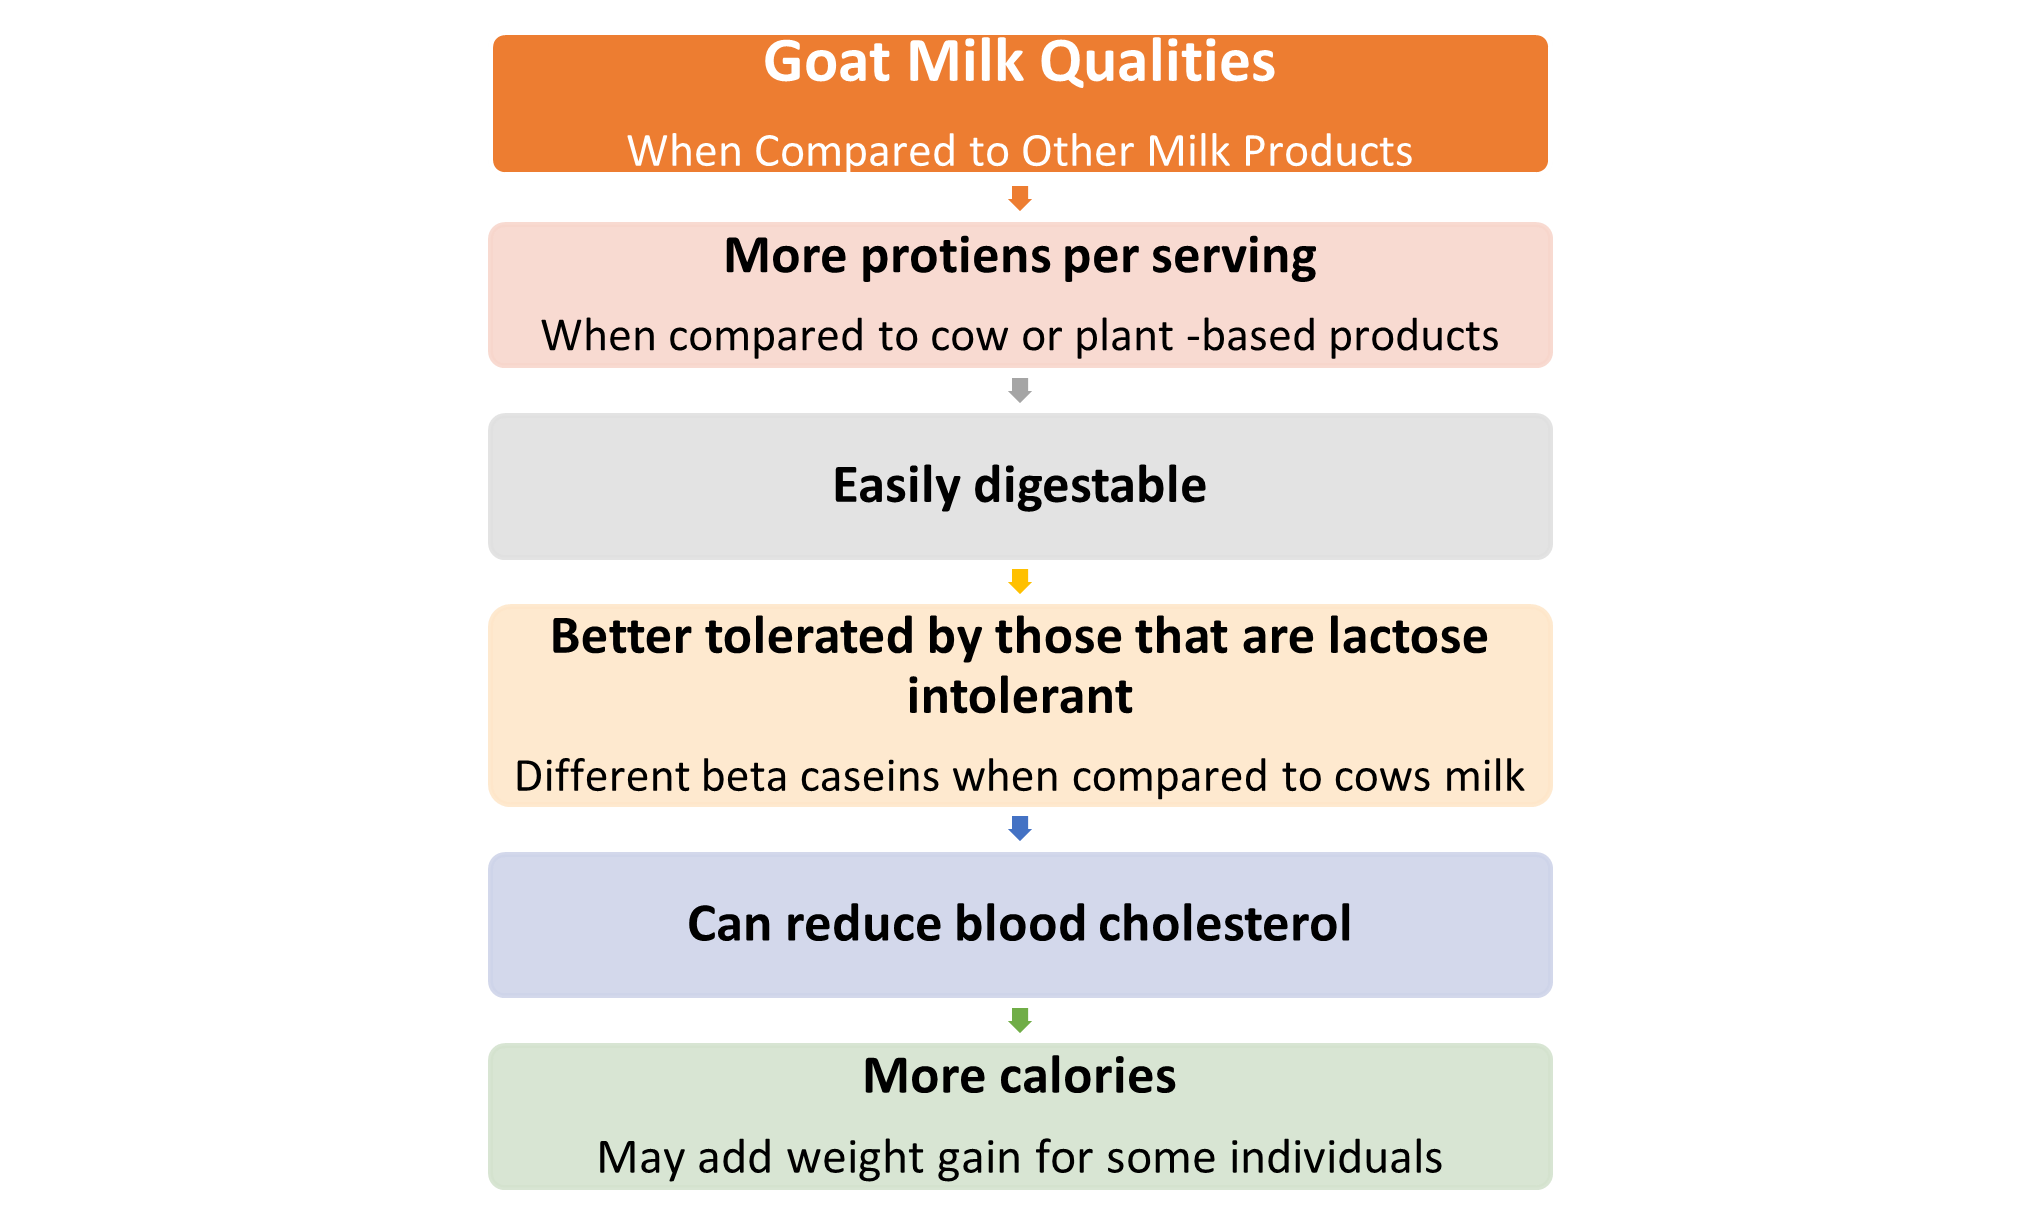 Goat milk qualities chart